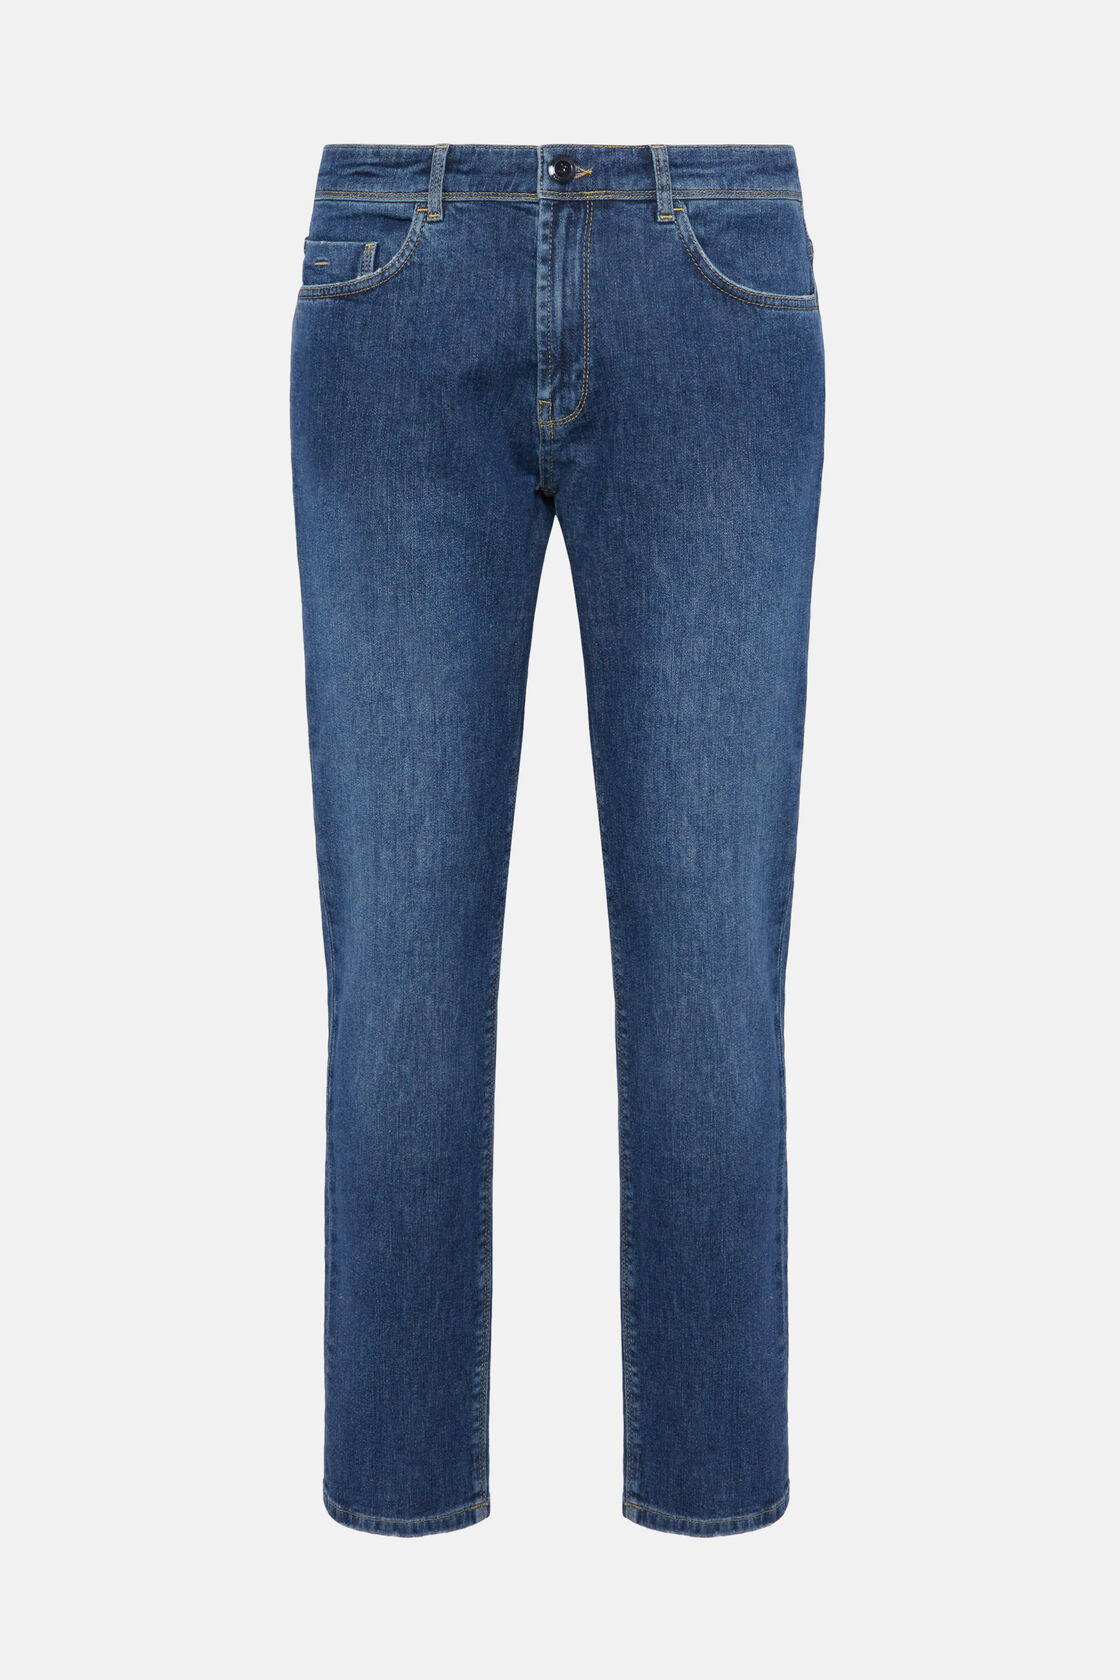 Donkerblauwe stretch denim jeans, Dark Blue, hi-res